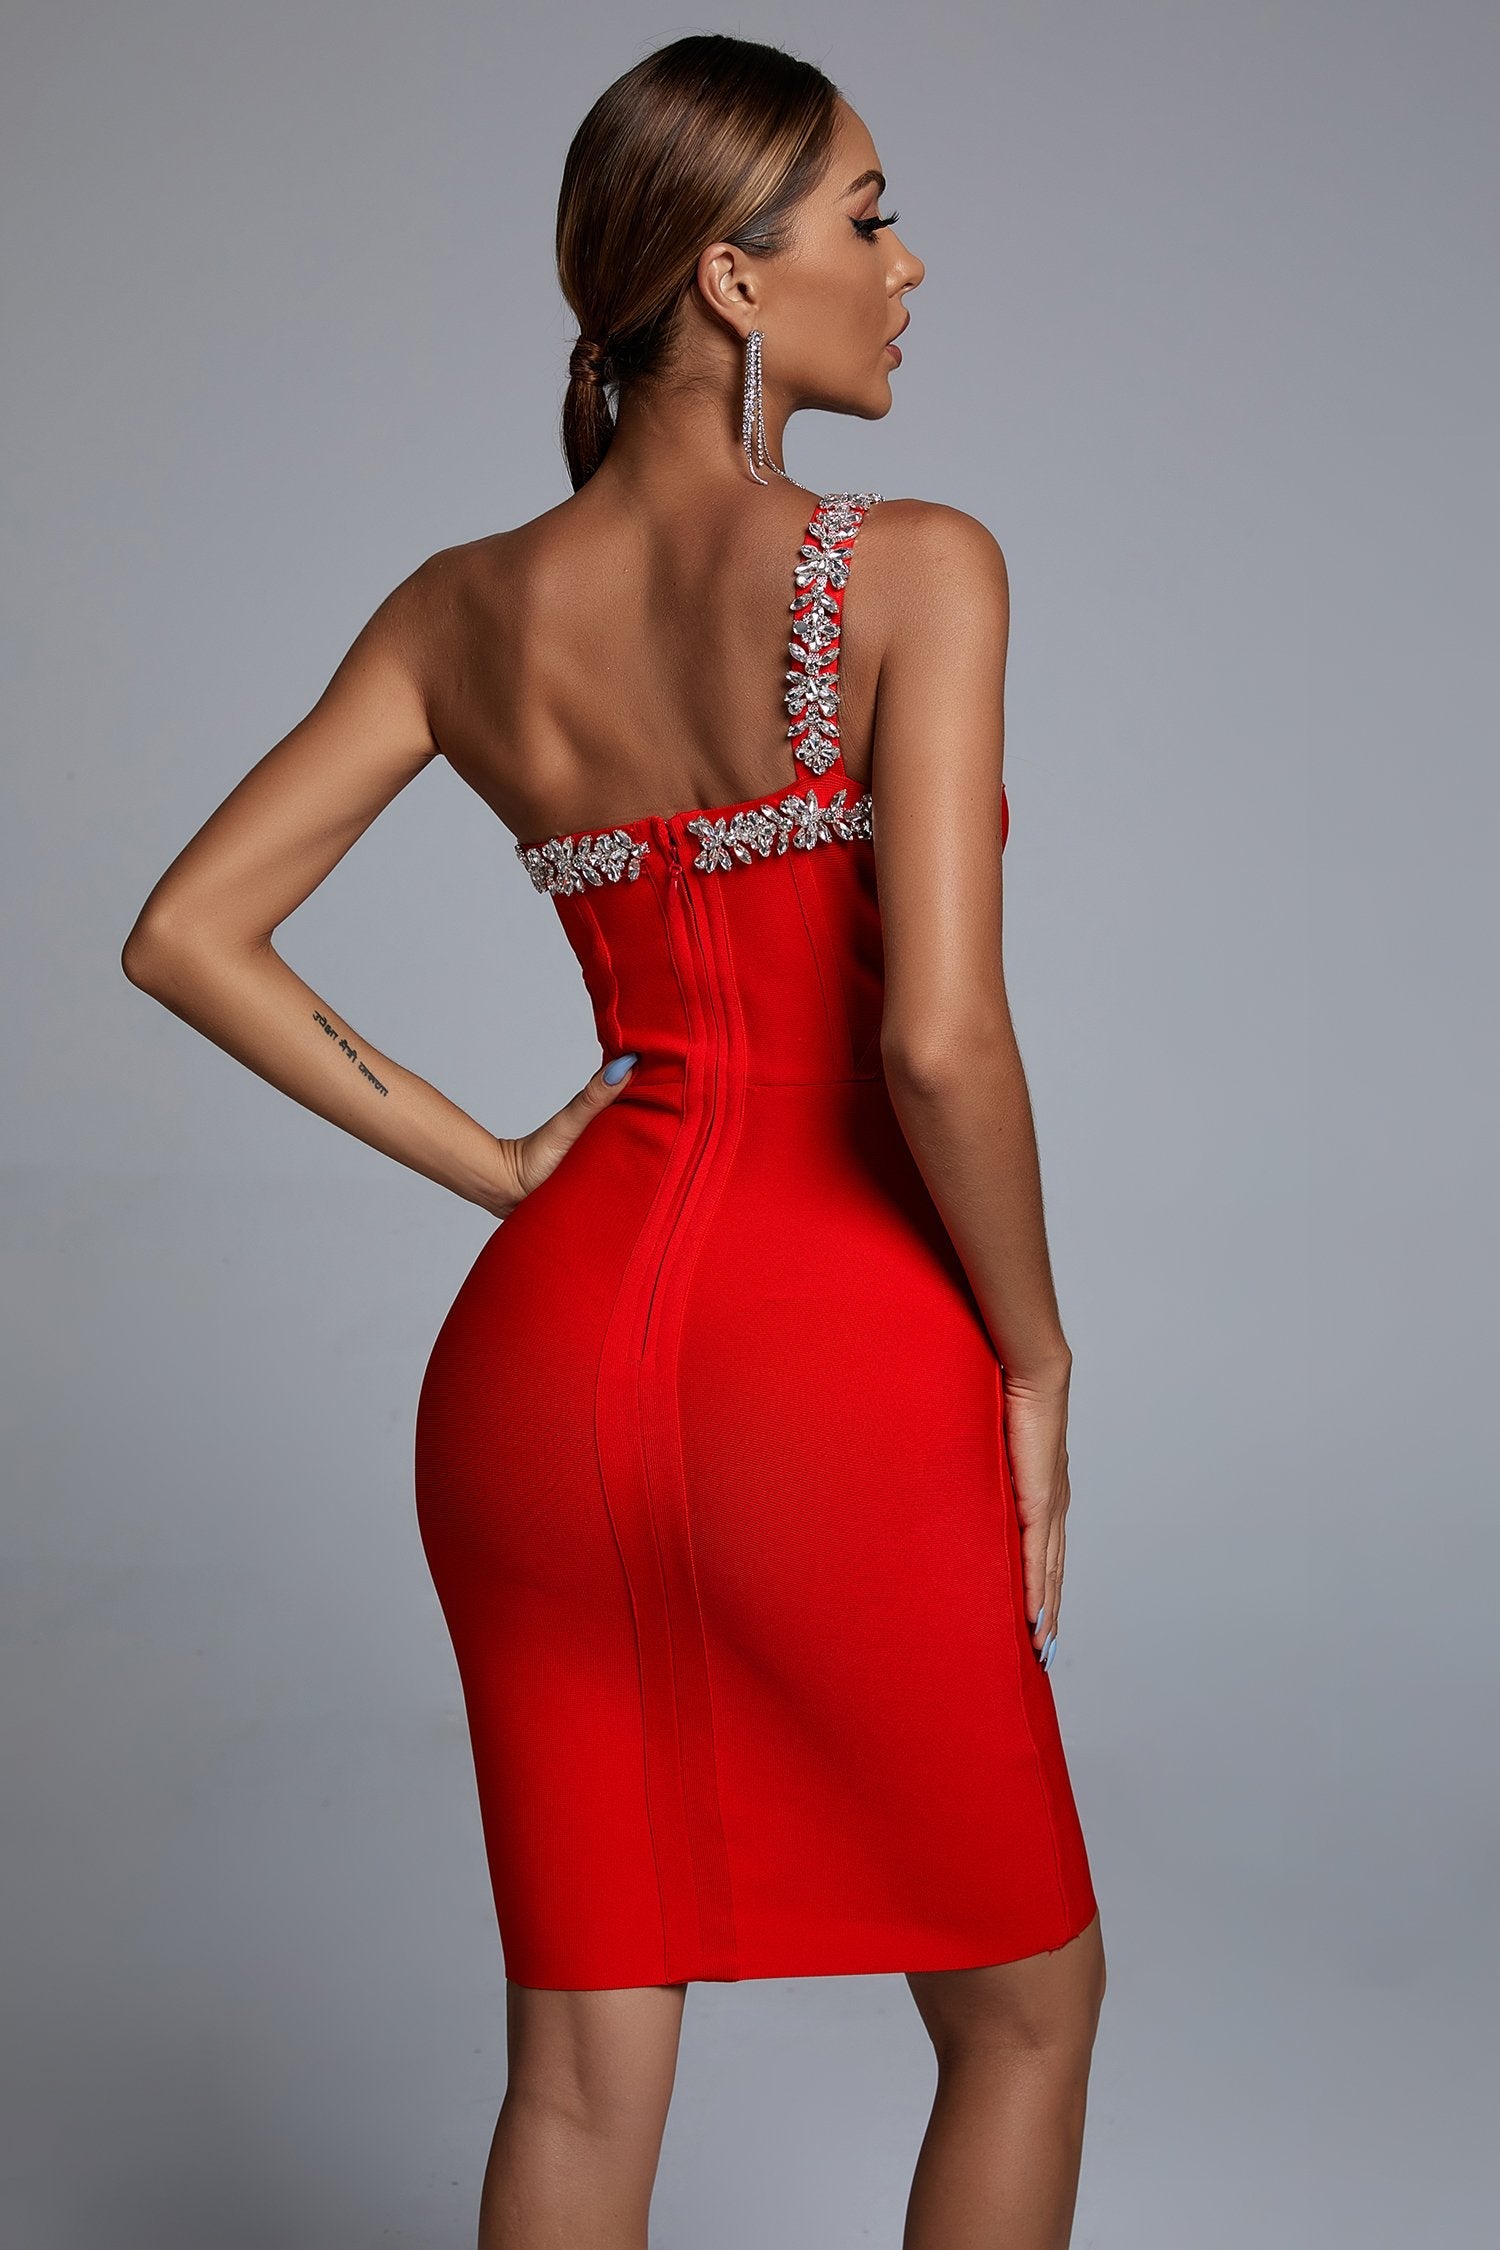 Hanny Crystal Bandage Dress - Red - Bellabarnett